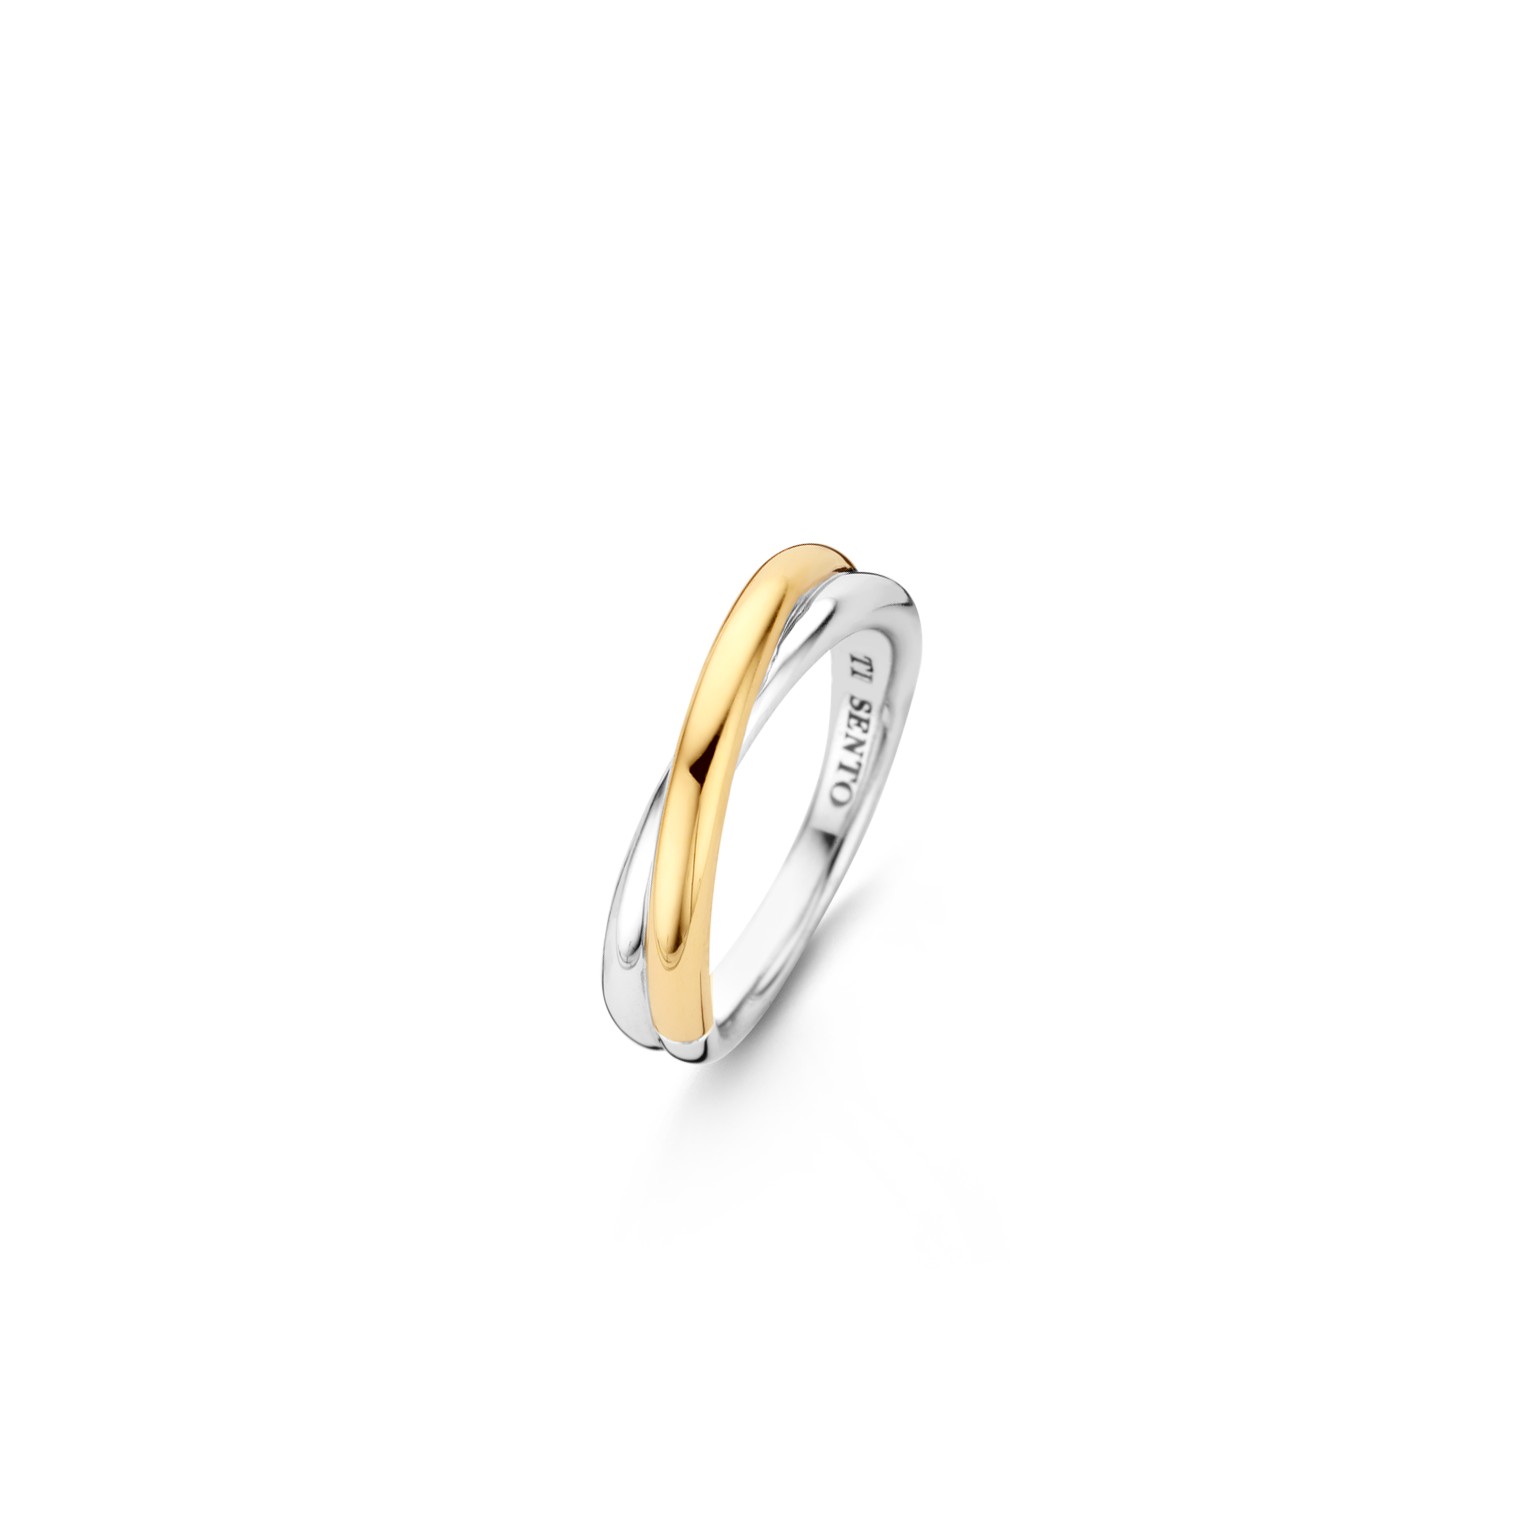 TI SENTO - Milano Ring 1953SY Gala Jewelers Inc. White Oak, PA